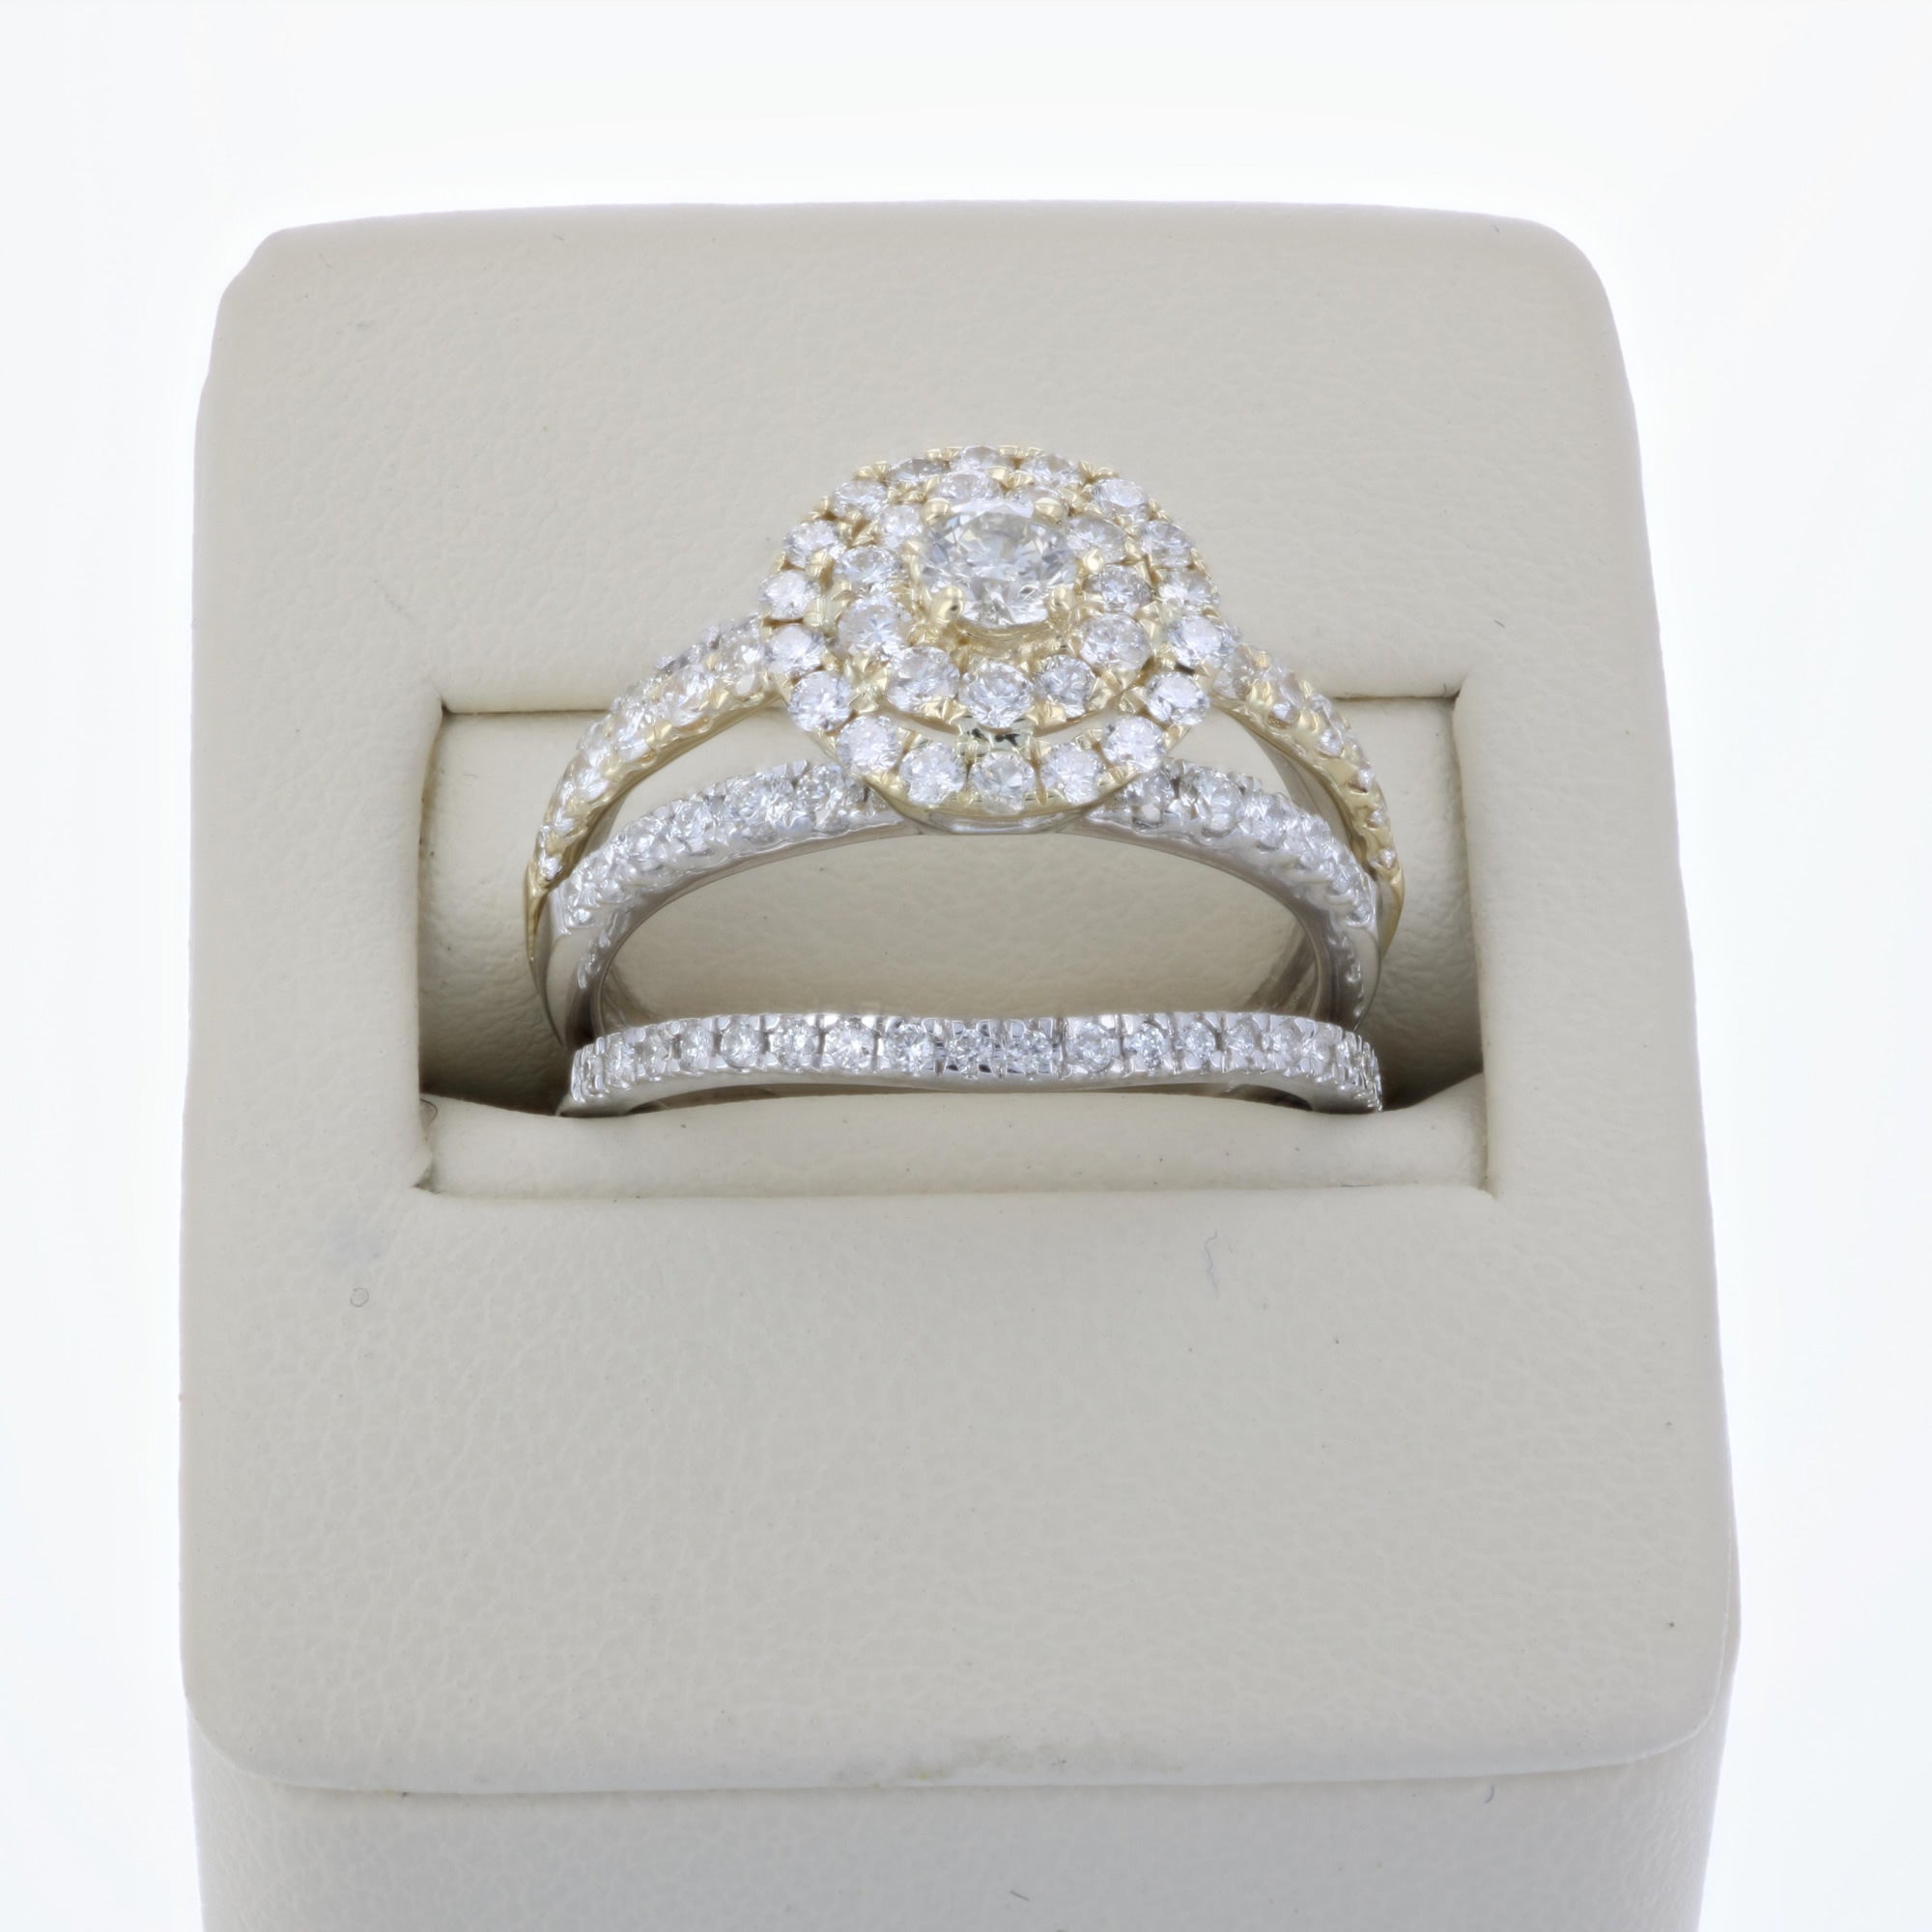 1.50 cttw Diamond Wedding Engagement Ring Set 14K White Yellow Gold Halo